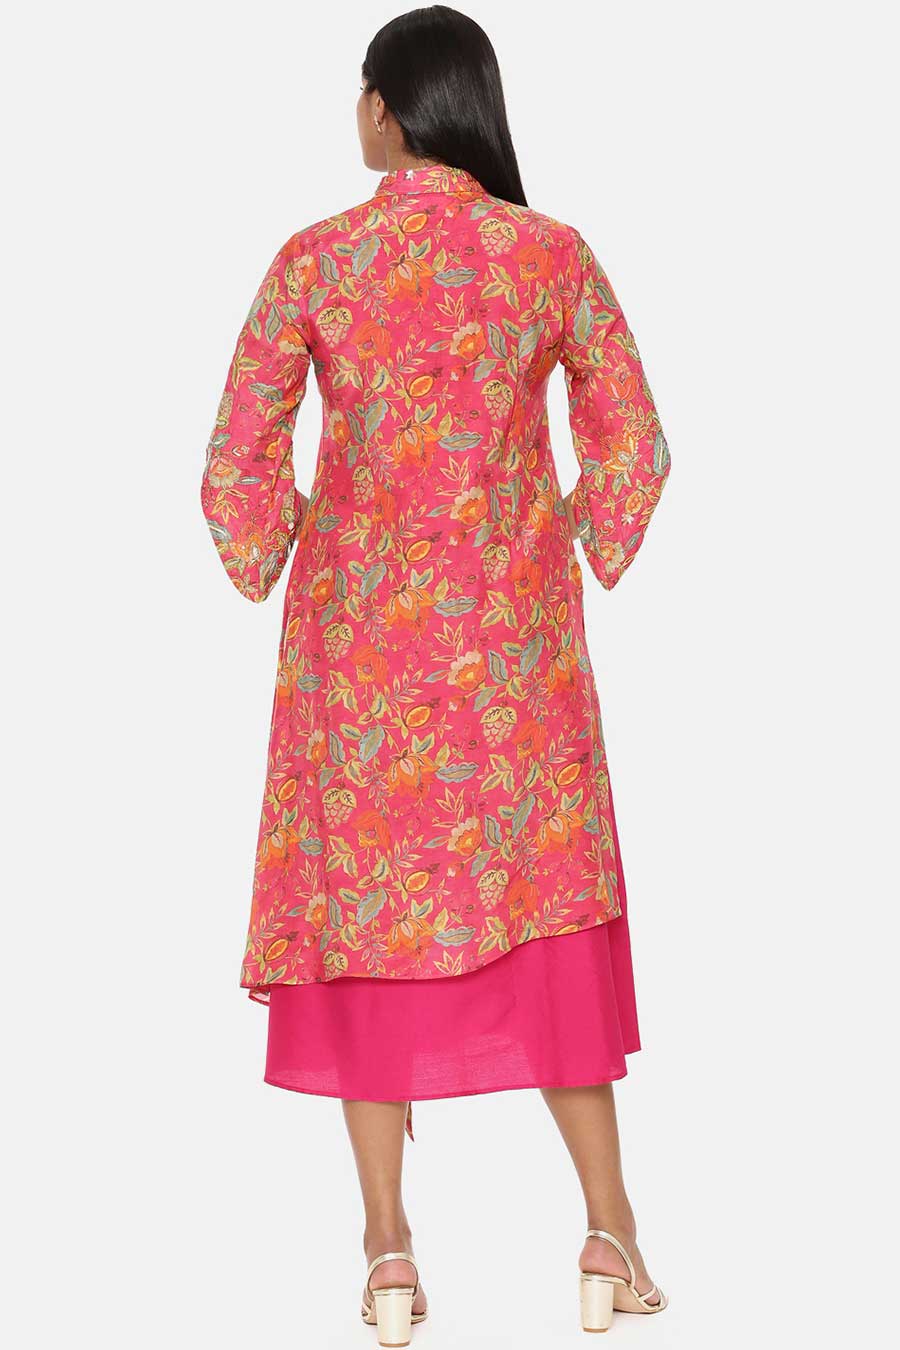 Pink Floral Print Dress